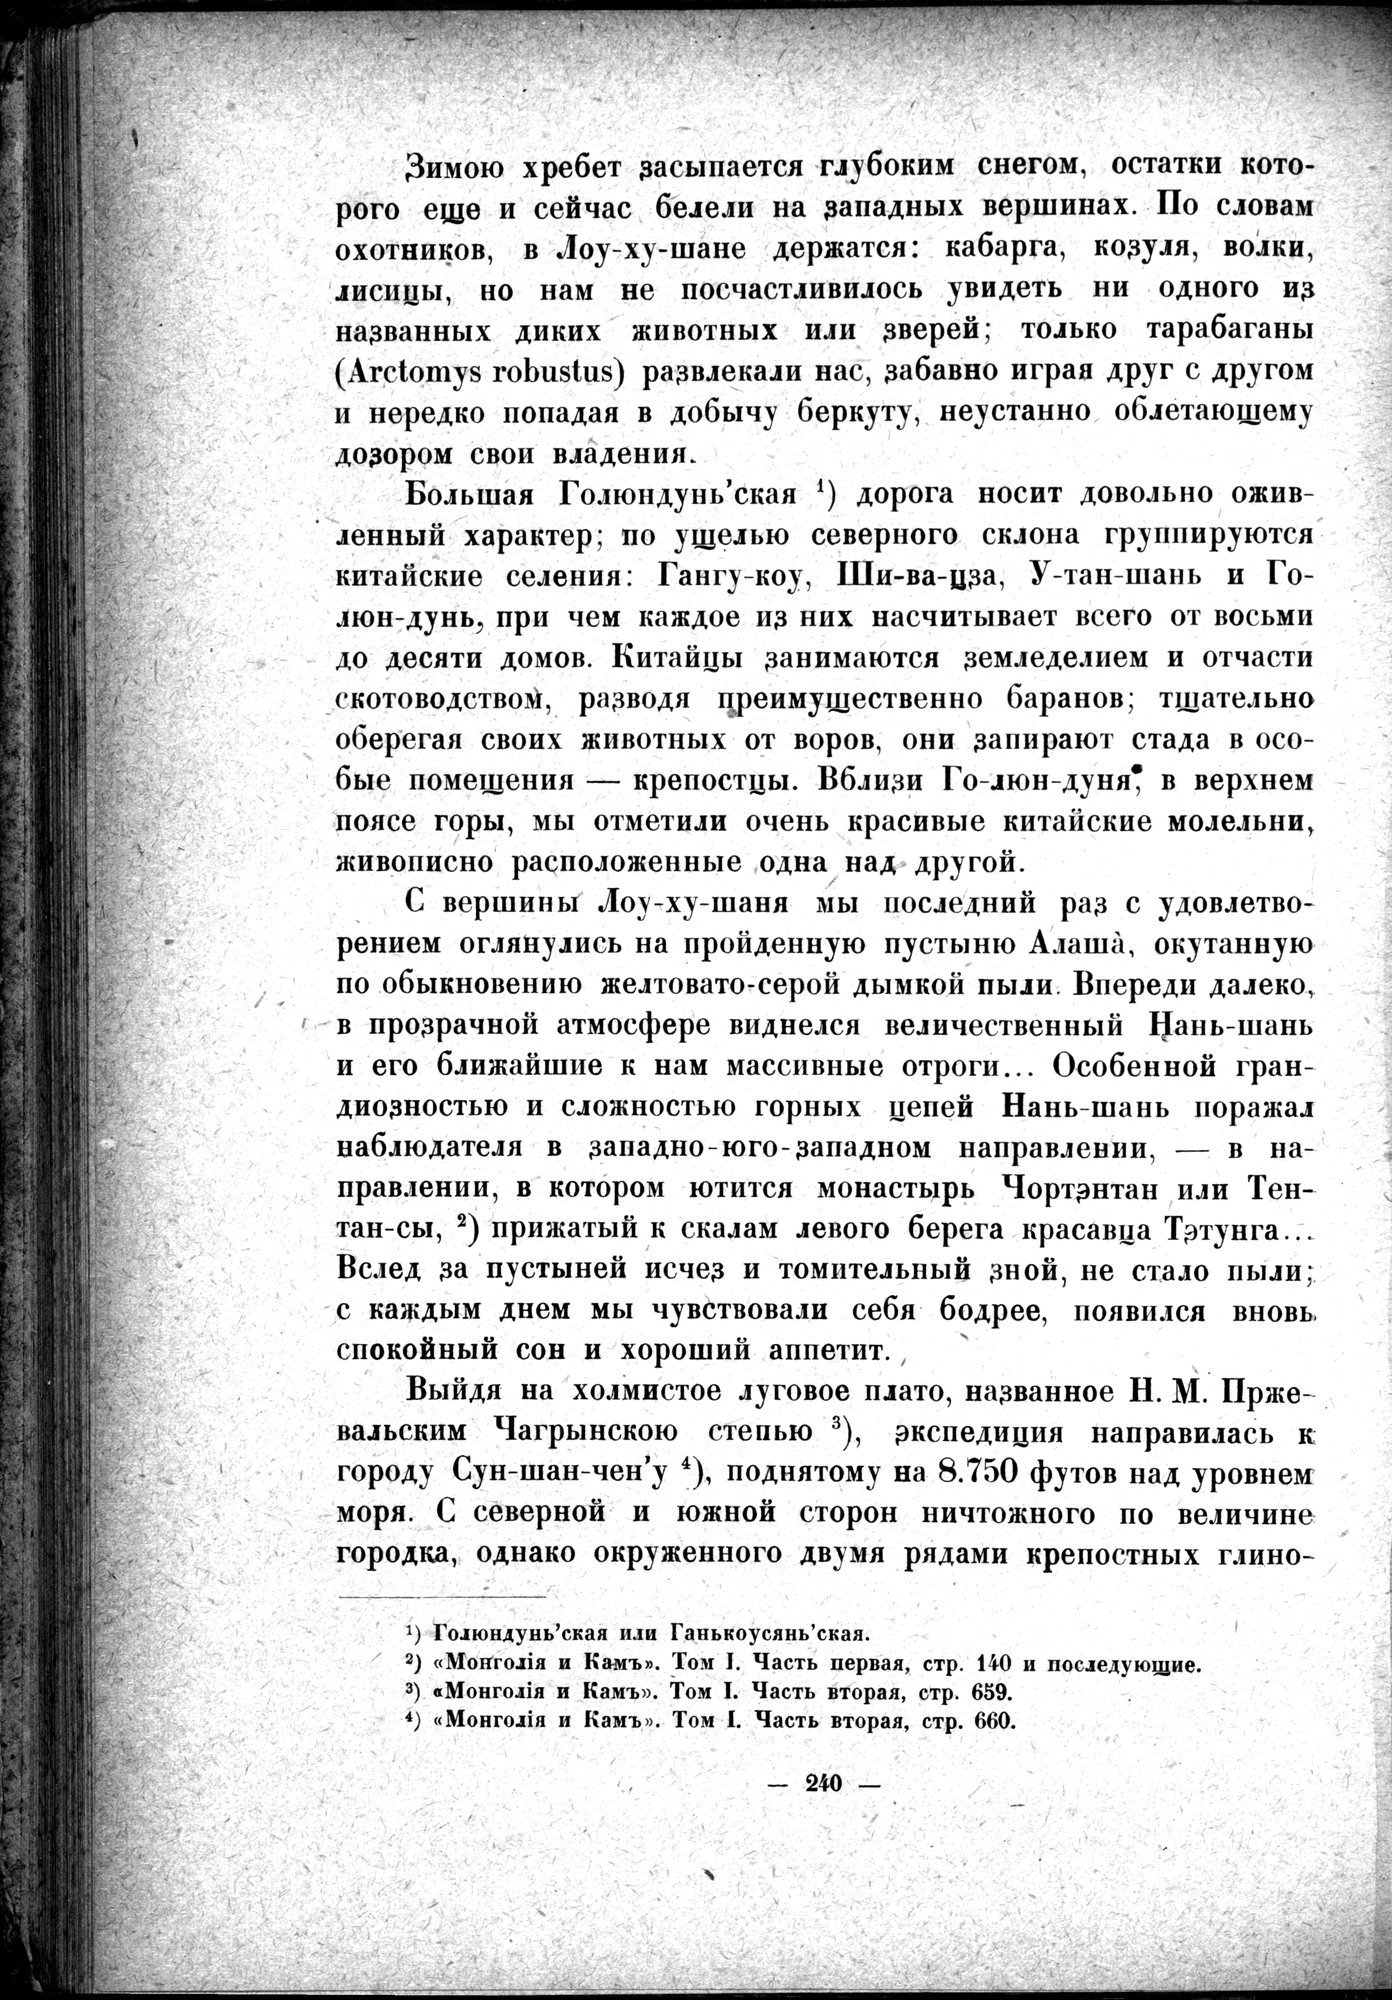 Mongoliya i Amdo i mertby gorod Khara-Khoto : vol.1 / Page 286 (Grayscale High Resolution Image)